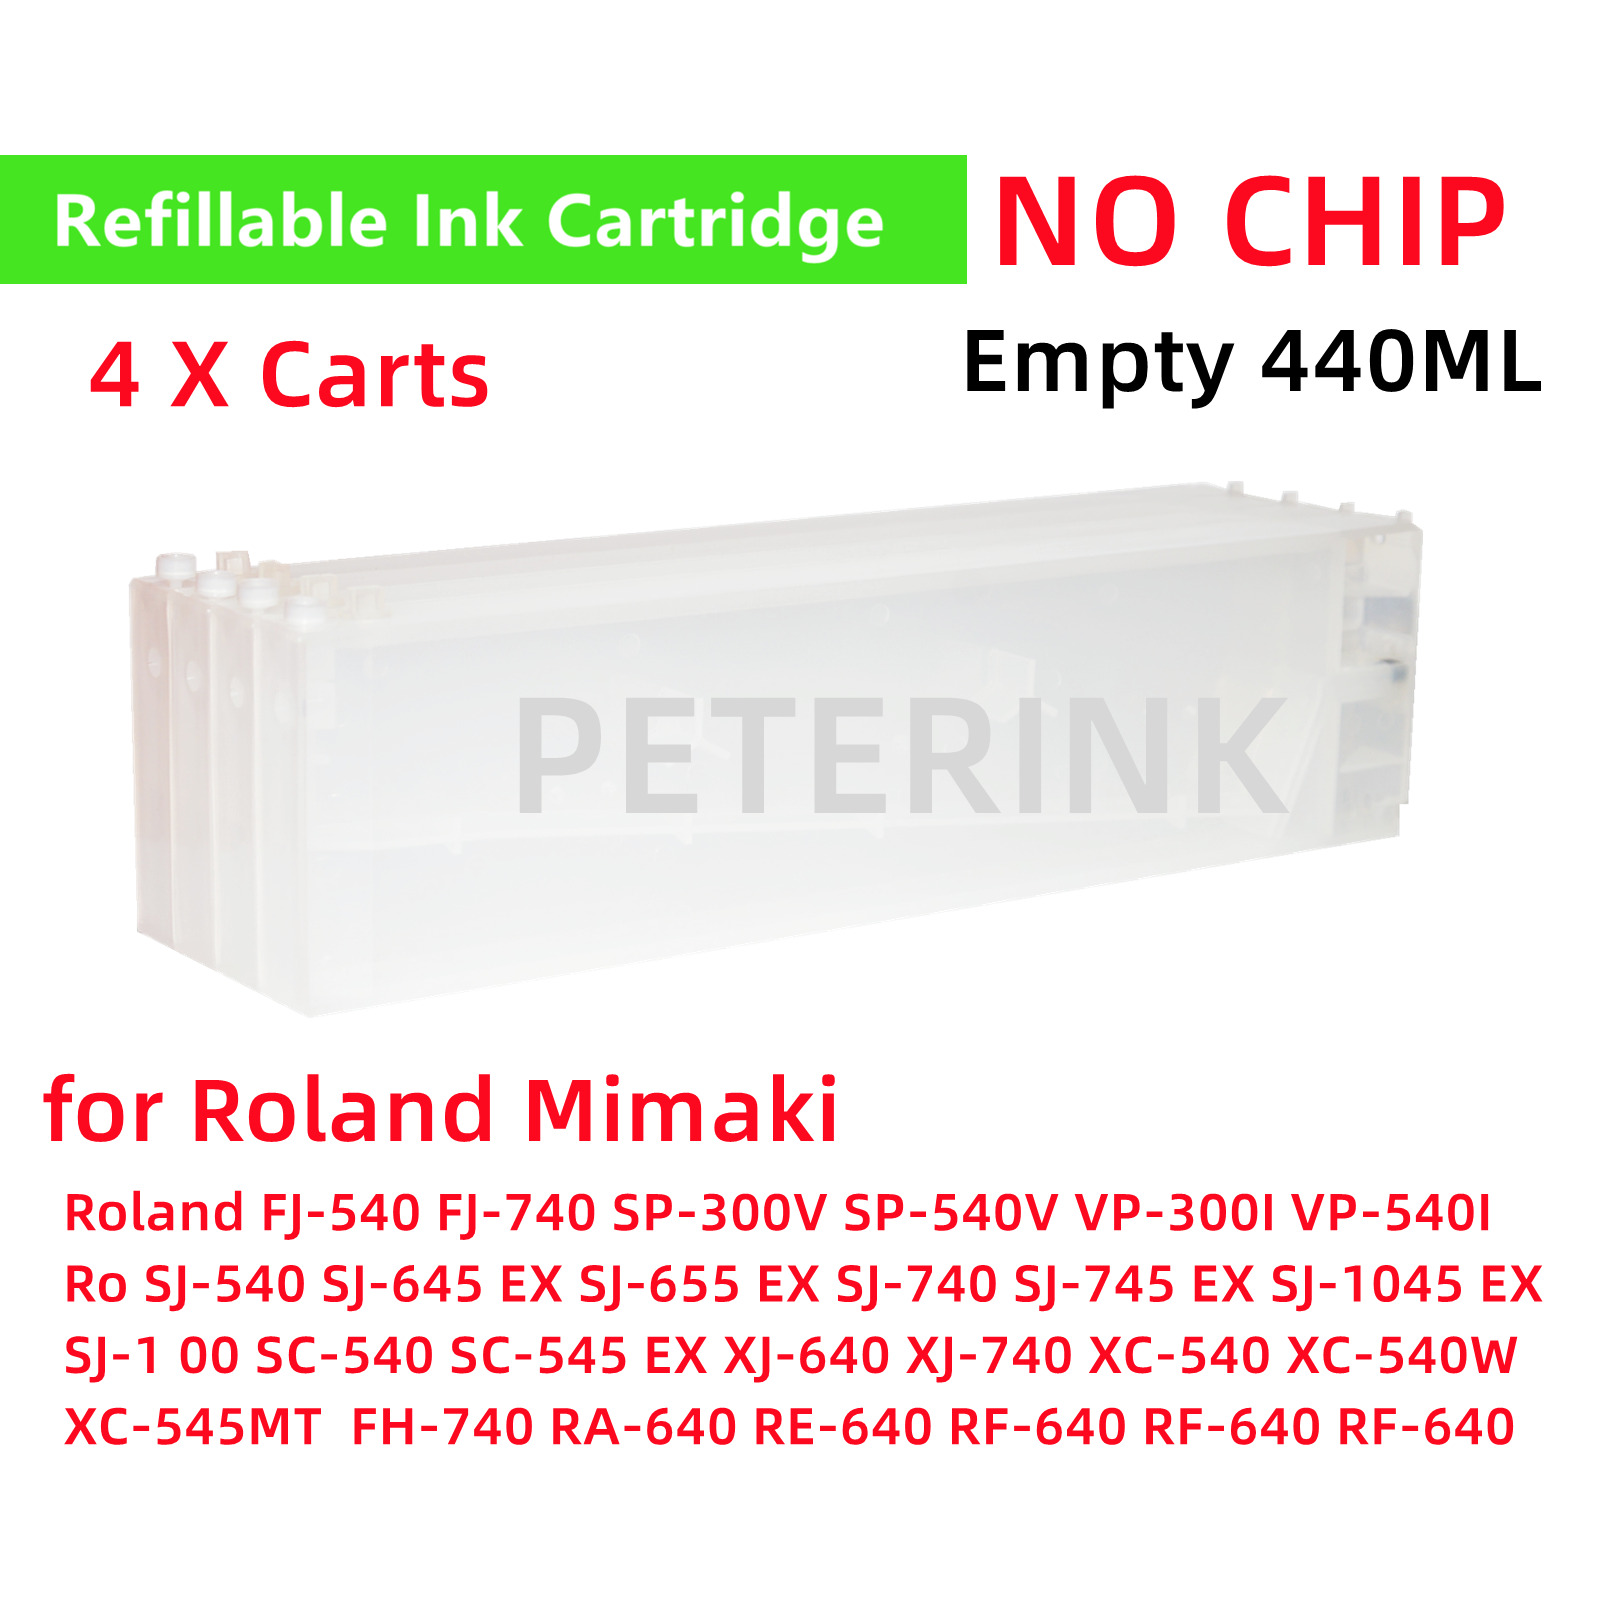 Empty 440ML Refillable Ink Cartridge for  Roland Mutoh Mimaki SJ-1000 SC-545 EX